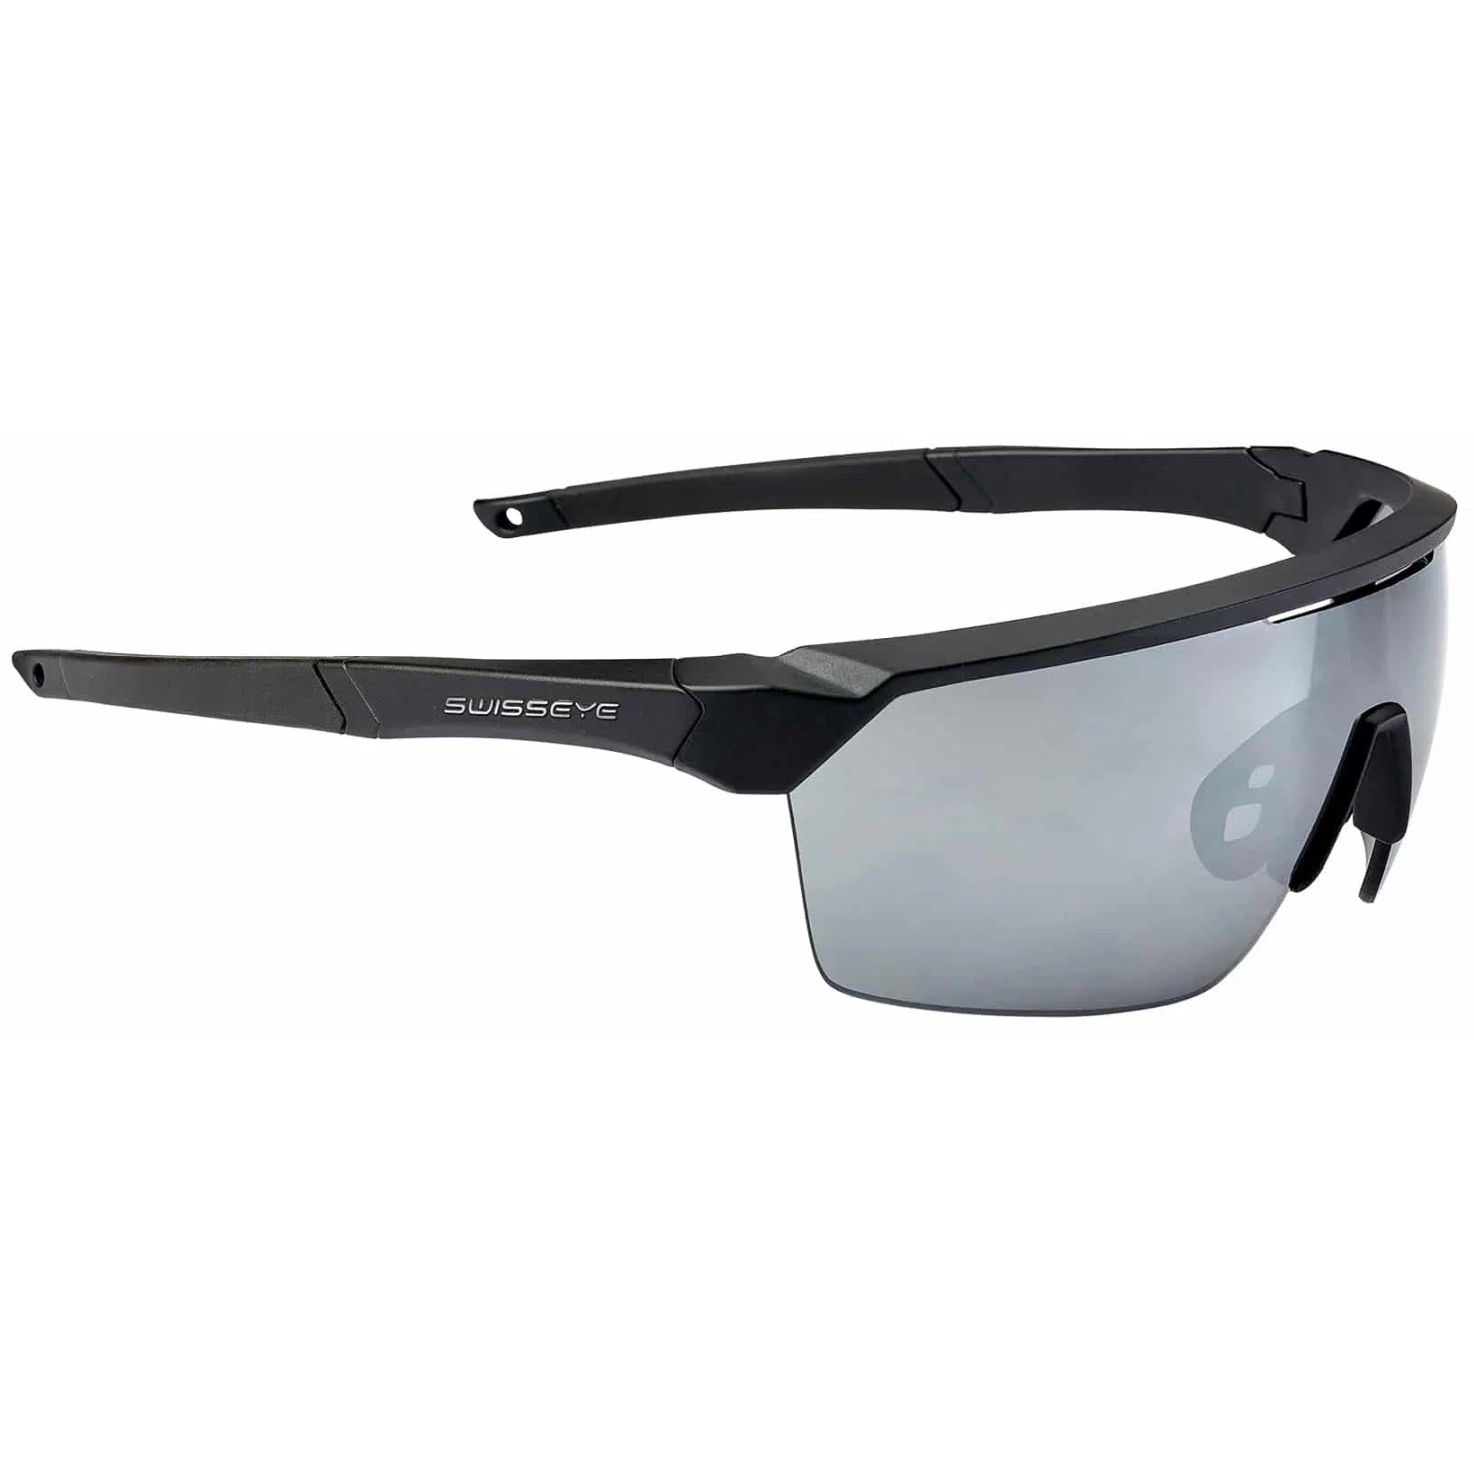 Productfoto van Swiss Eye Sprint Glasses 13041 - Gun Metal Matt/Black - Smoke FM